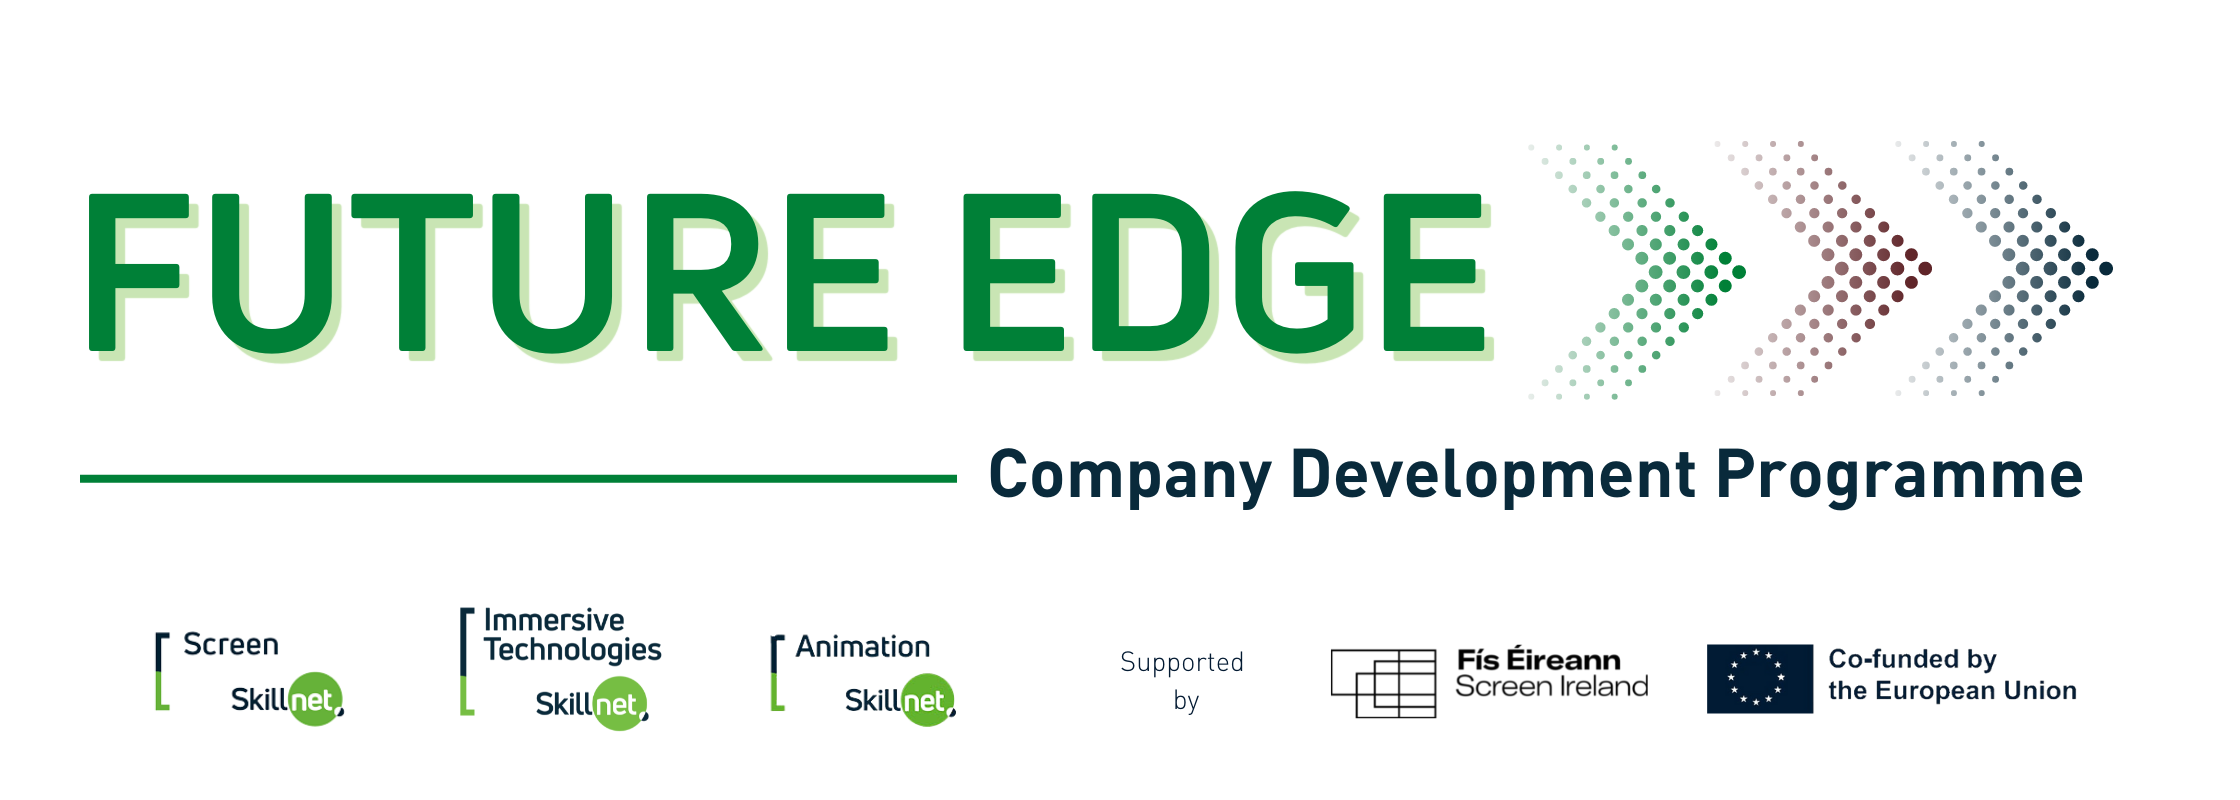 10.22 FUTURE EDGE – Company Development Programme